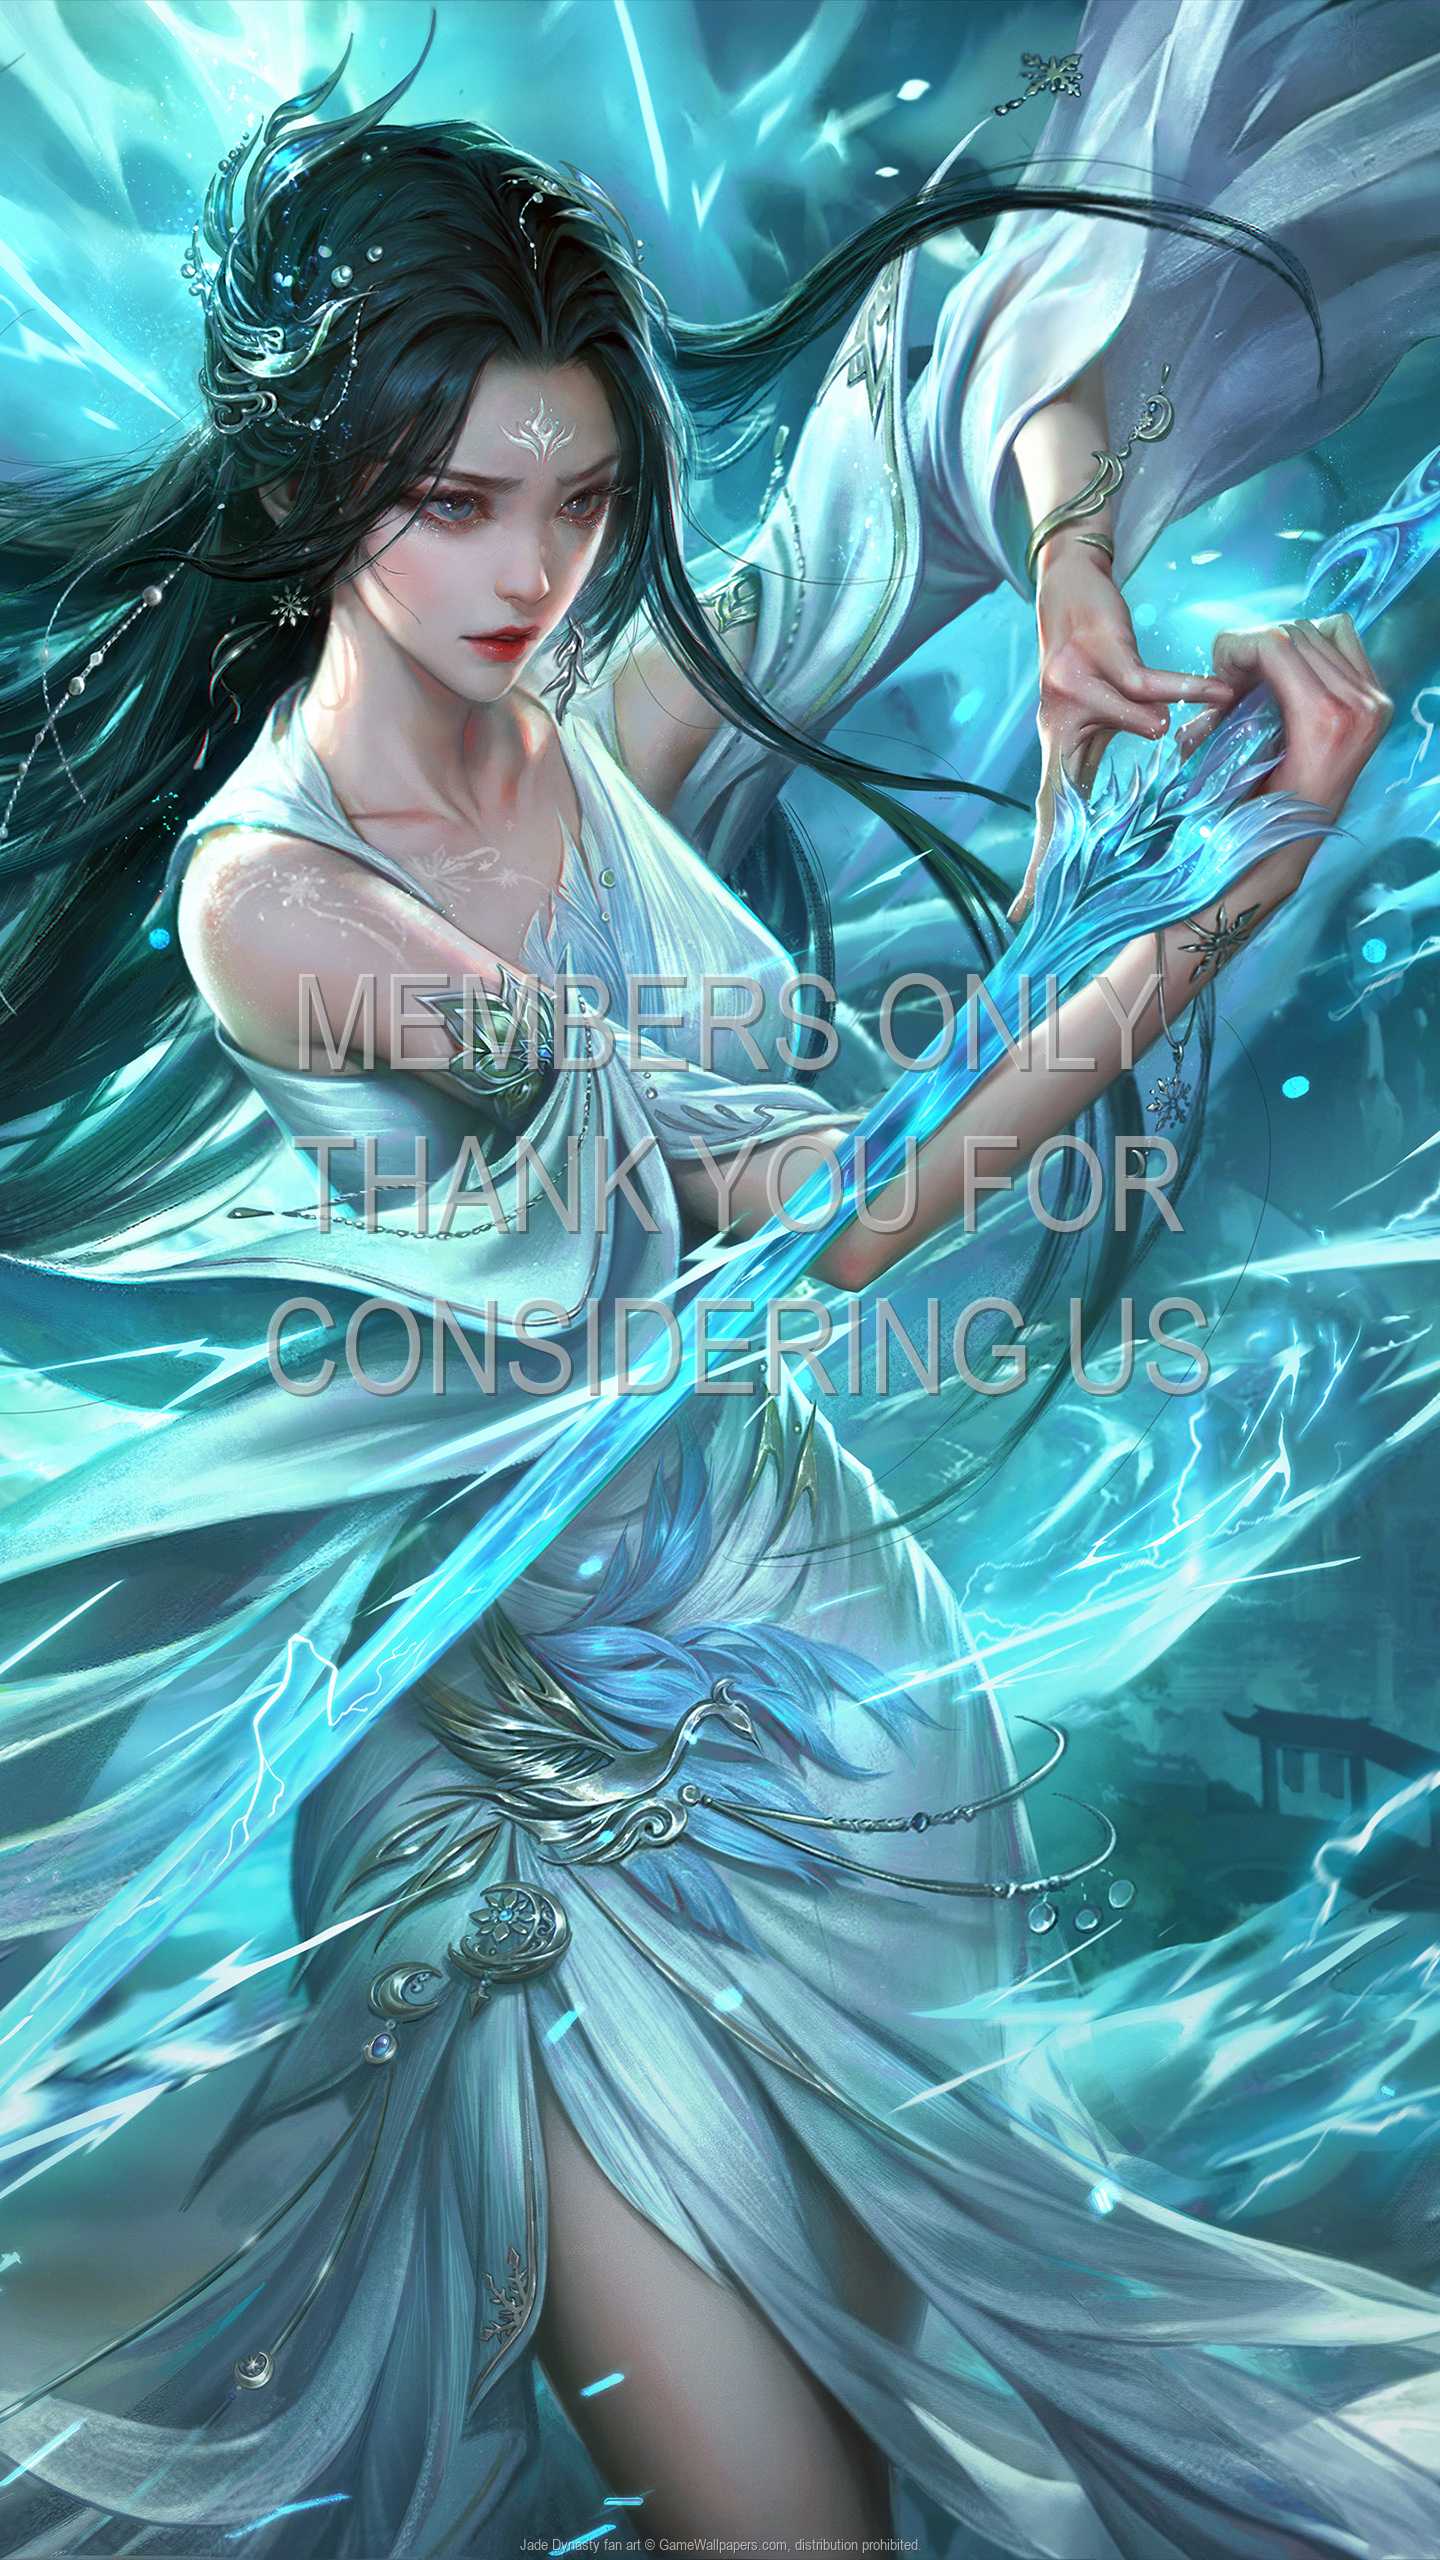 Jade Dynasty fan art 1440p Vertical Mobile wallpaper or background 01